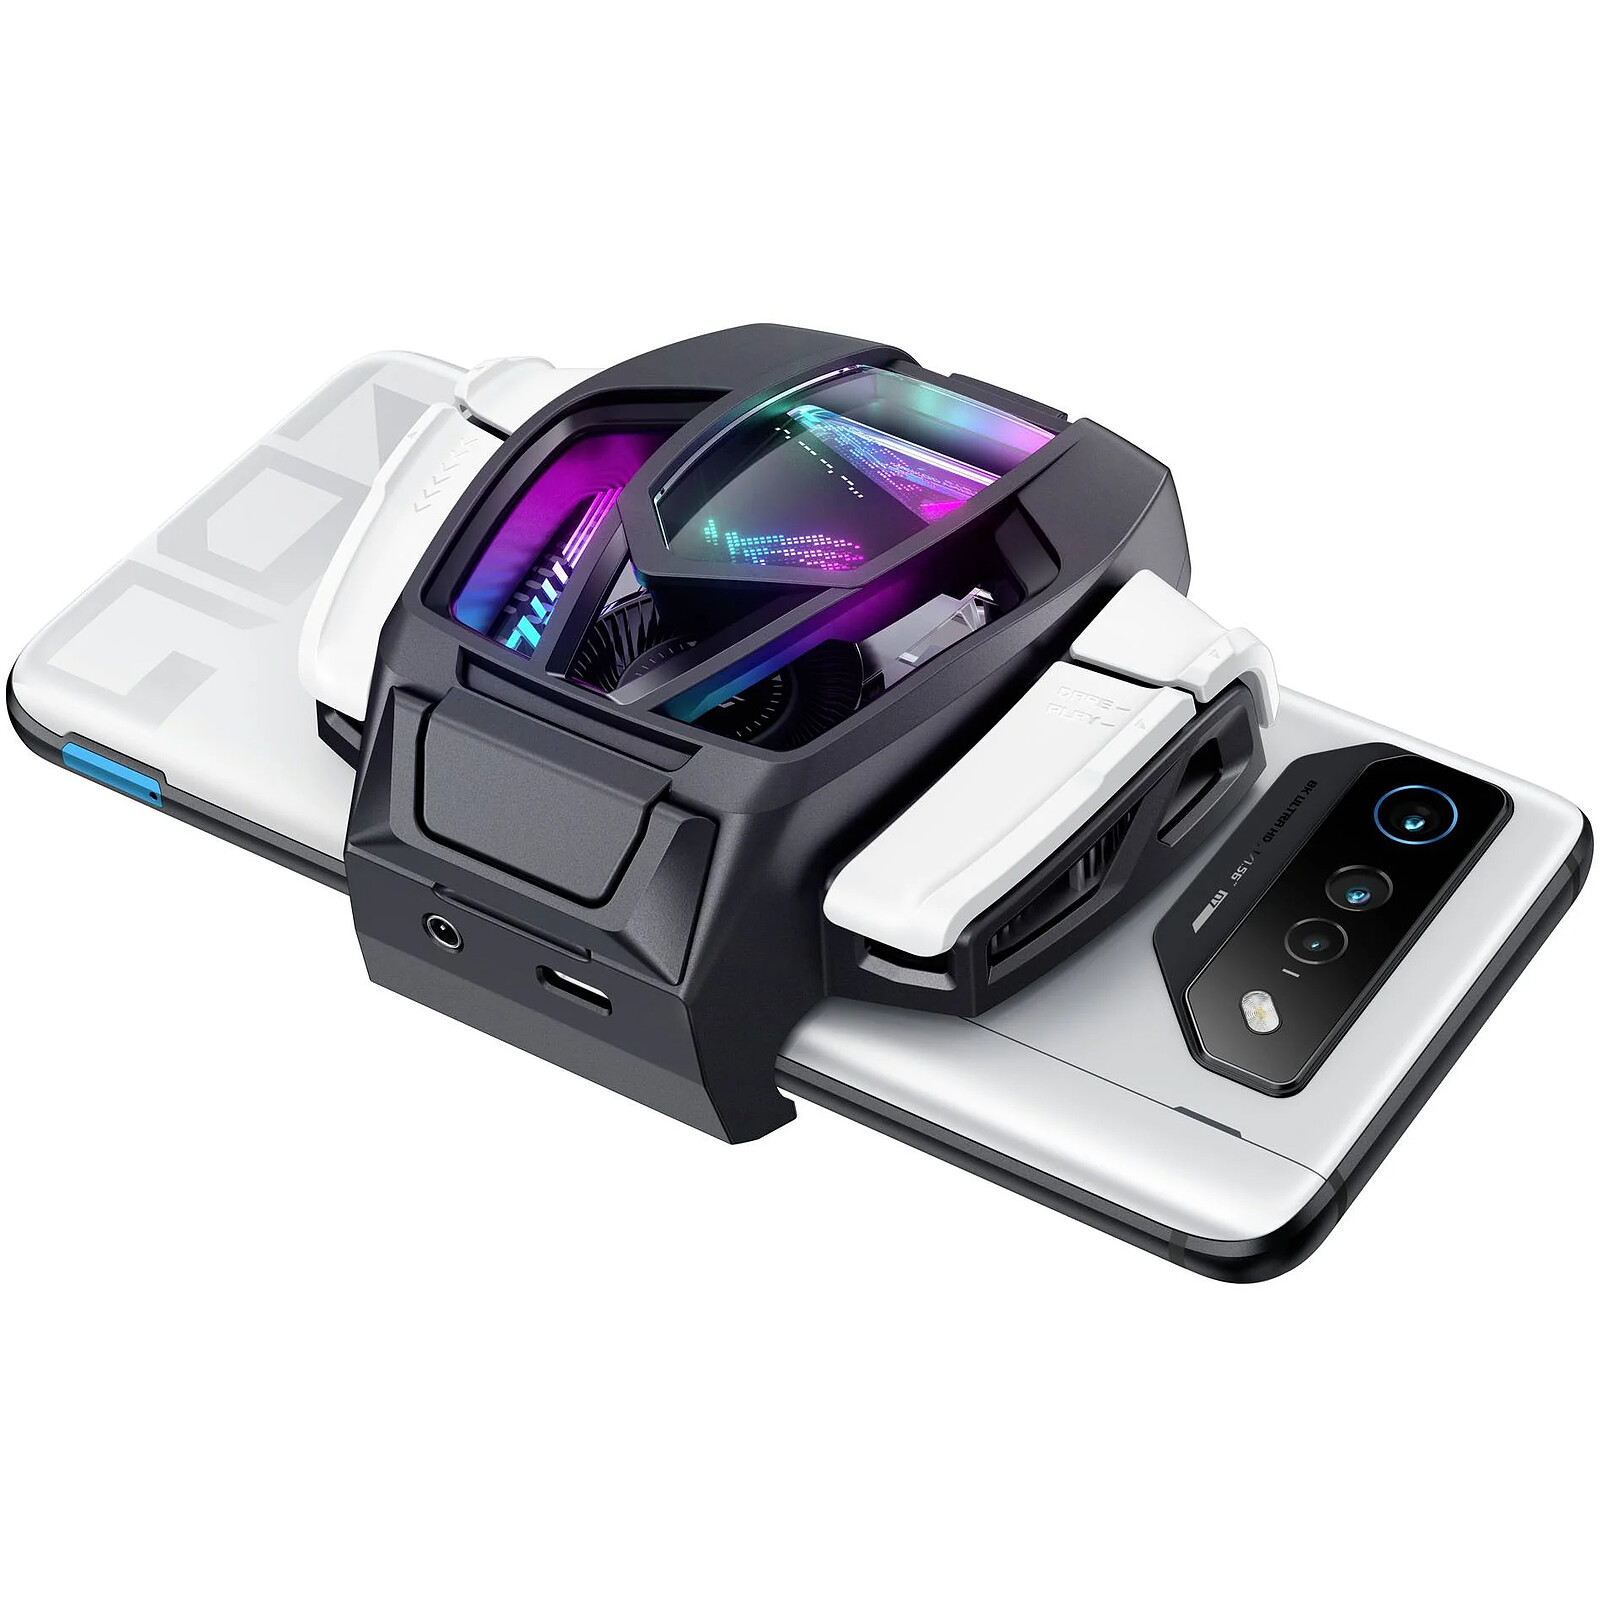 ASUS ROG AeroActive Cooler 7 - Smartphone miscellaneous accessories - LDLC  3-year warranty